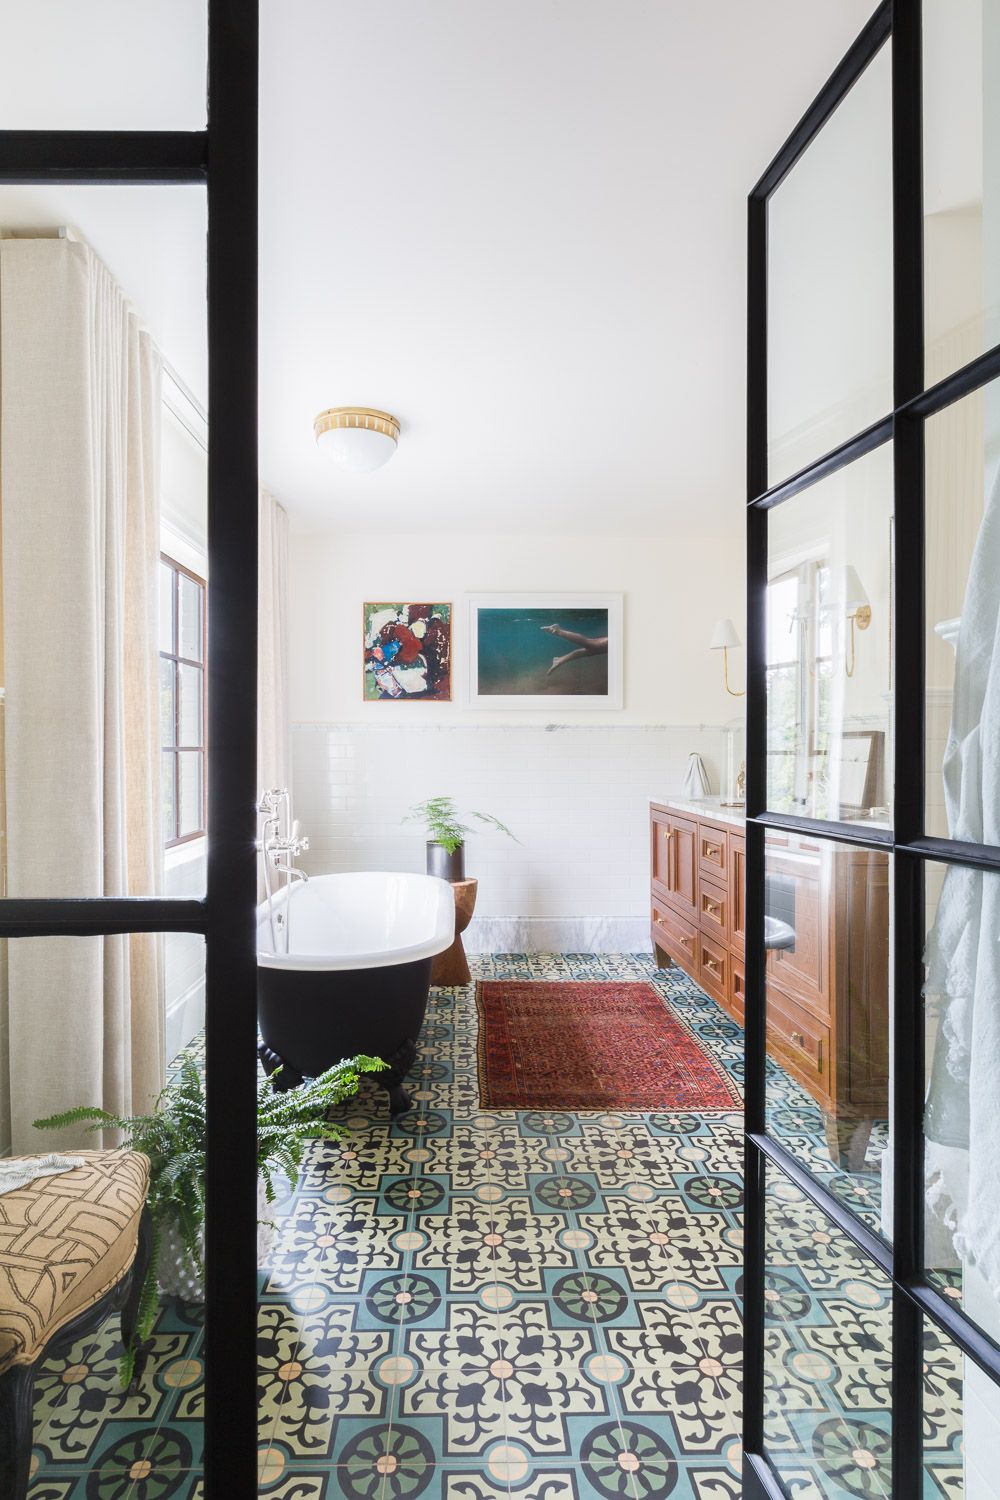 Creative Bathroom Tile Design Ideas   Tiles for Floor, Showers and ...